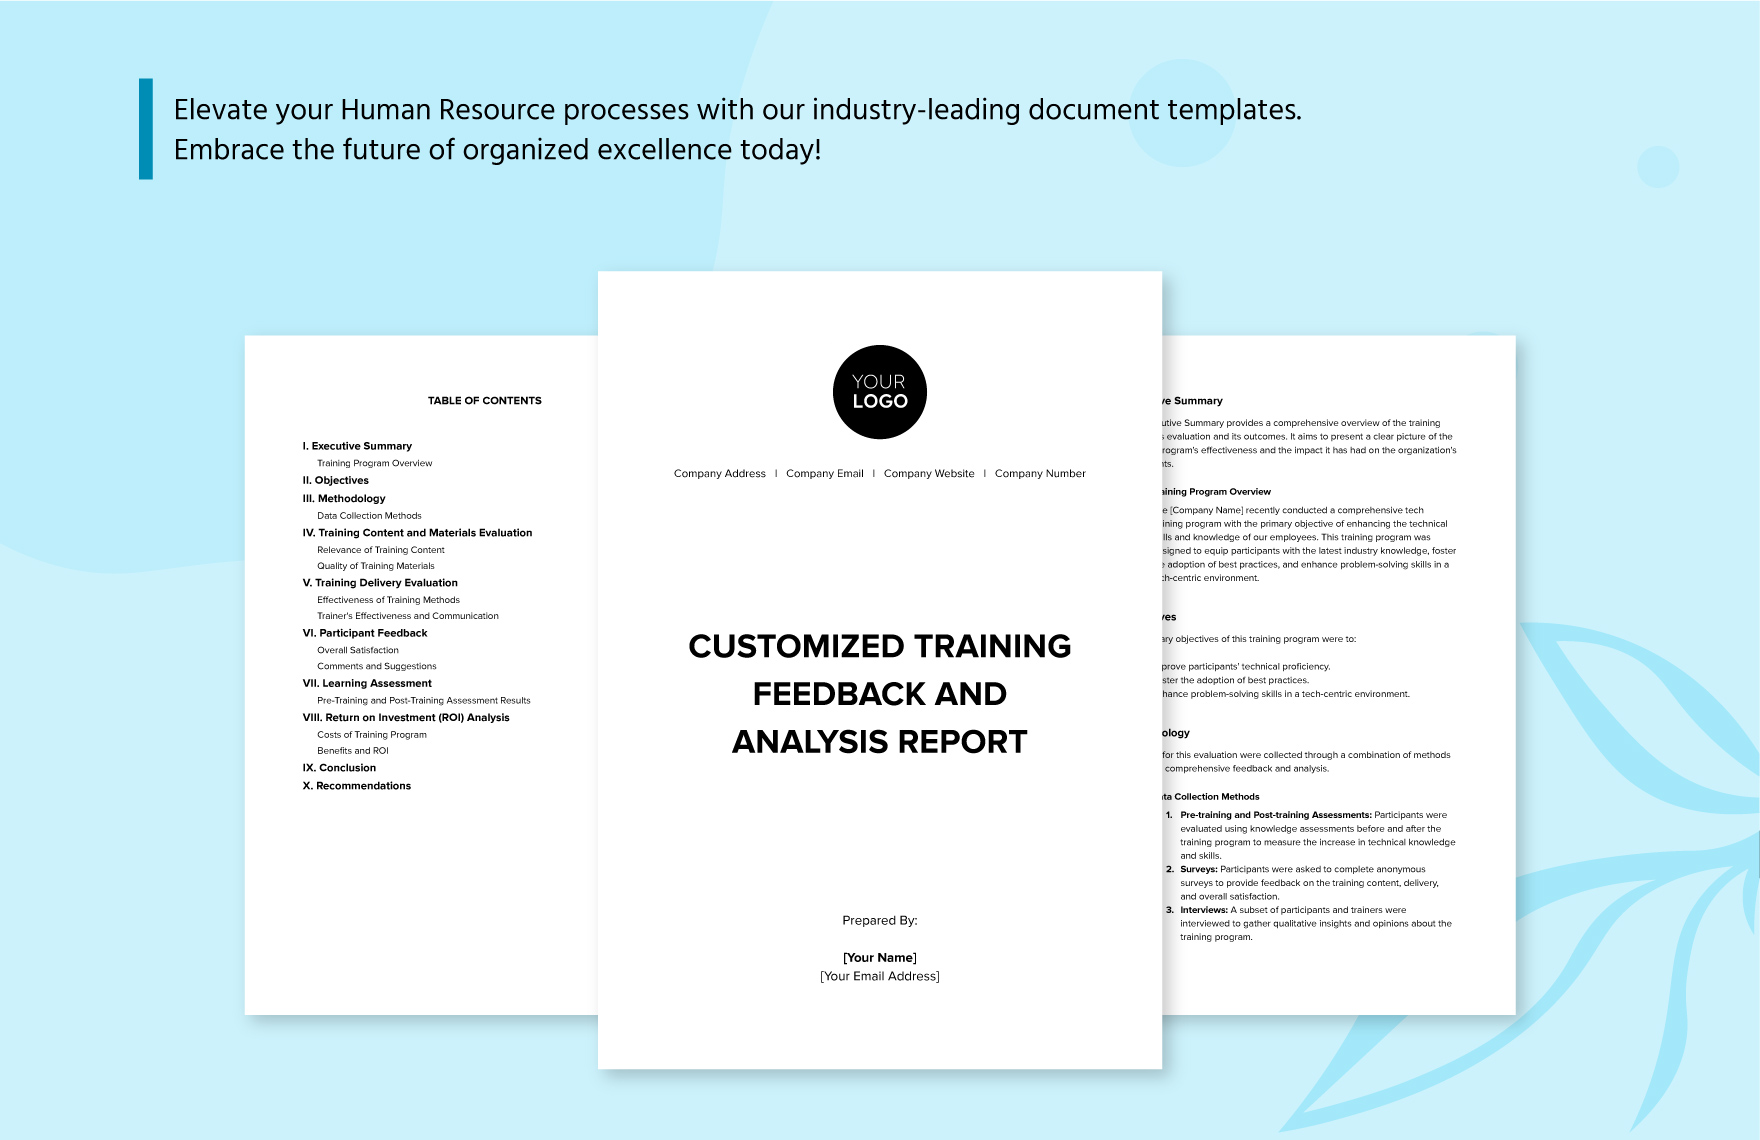 Customized Training Feedback & Analysis Report HR Template